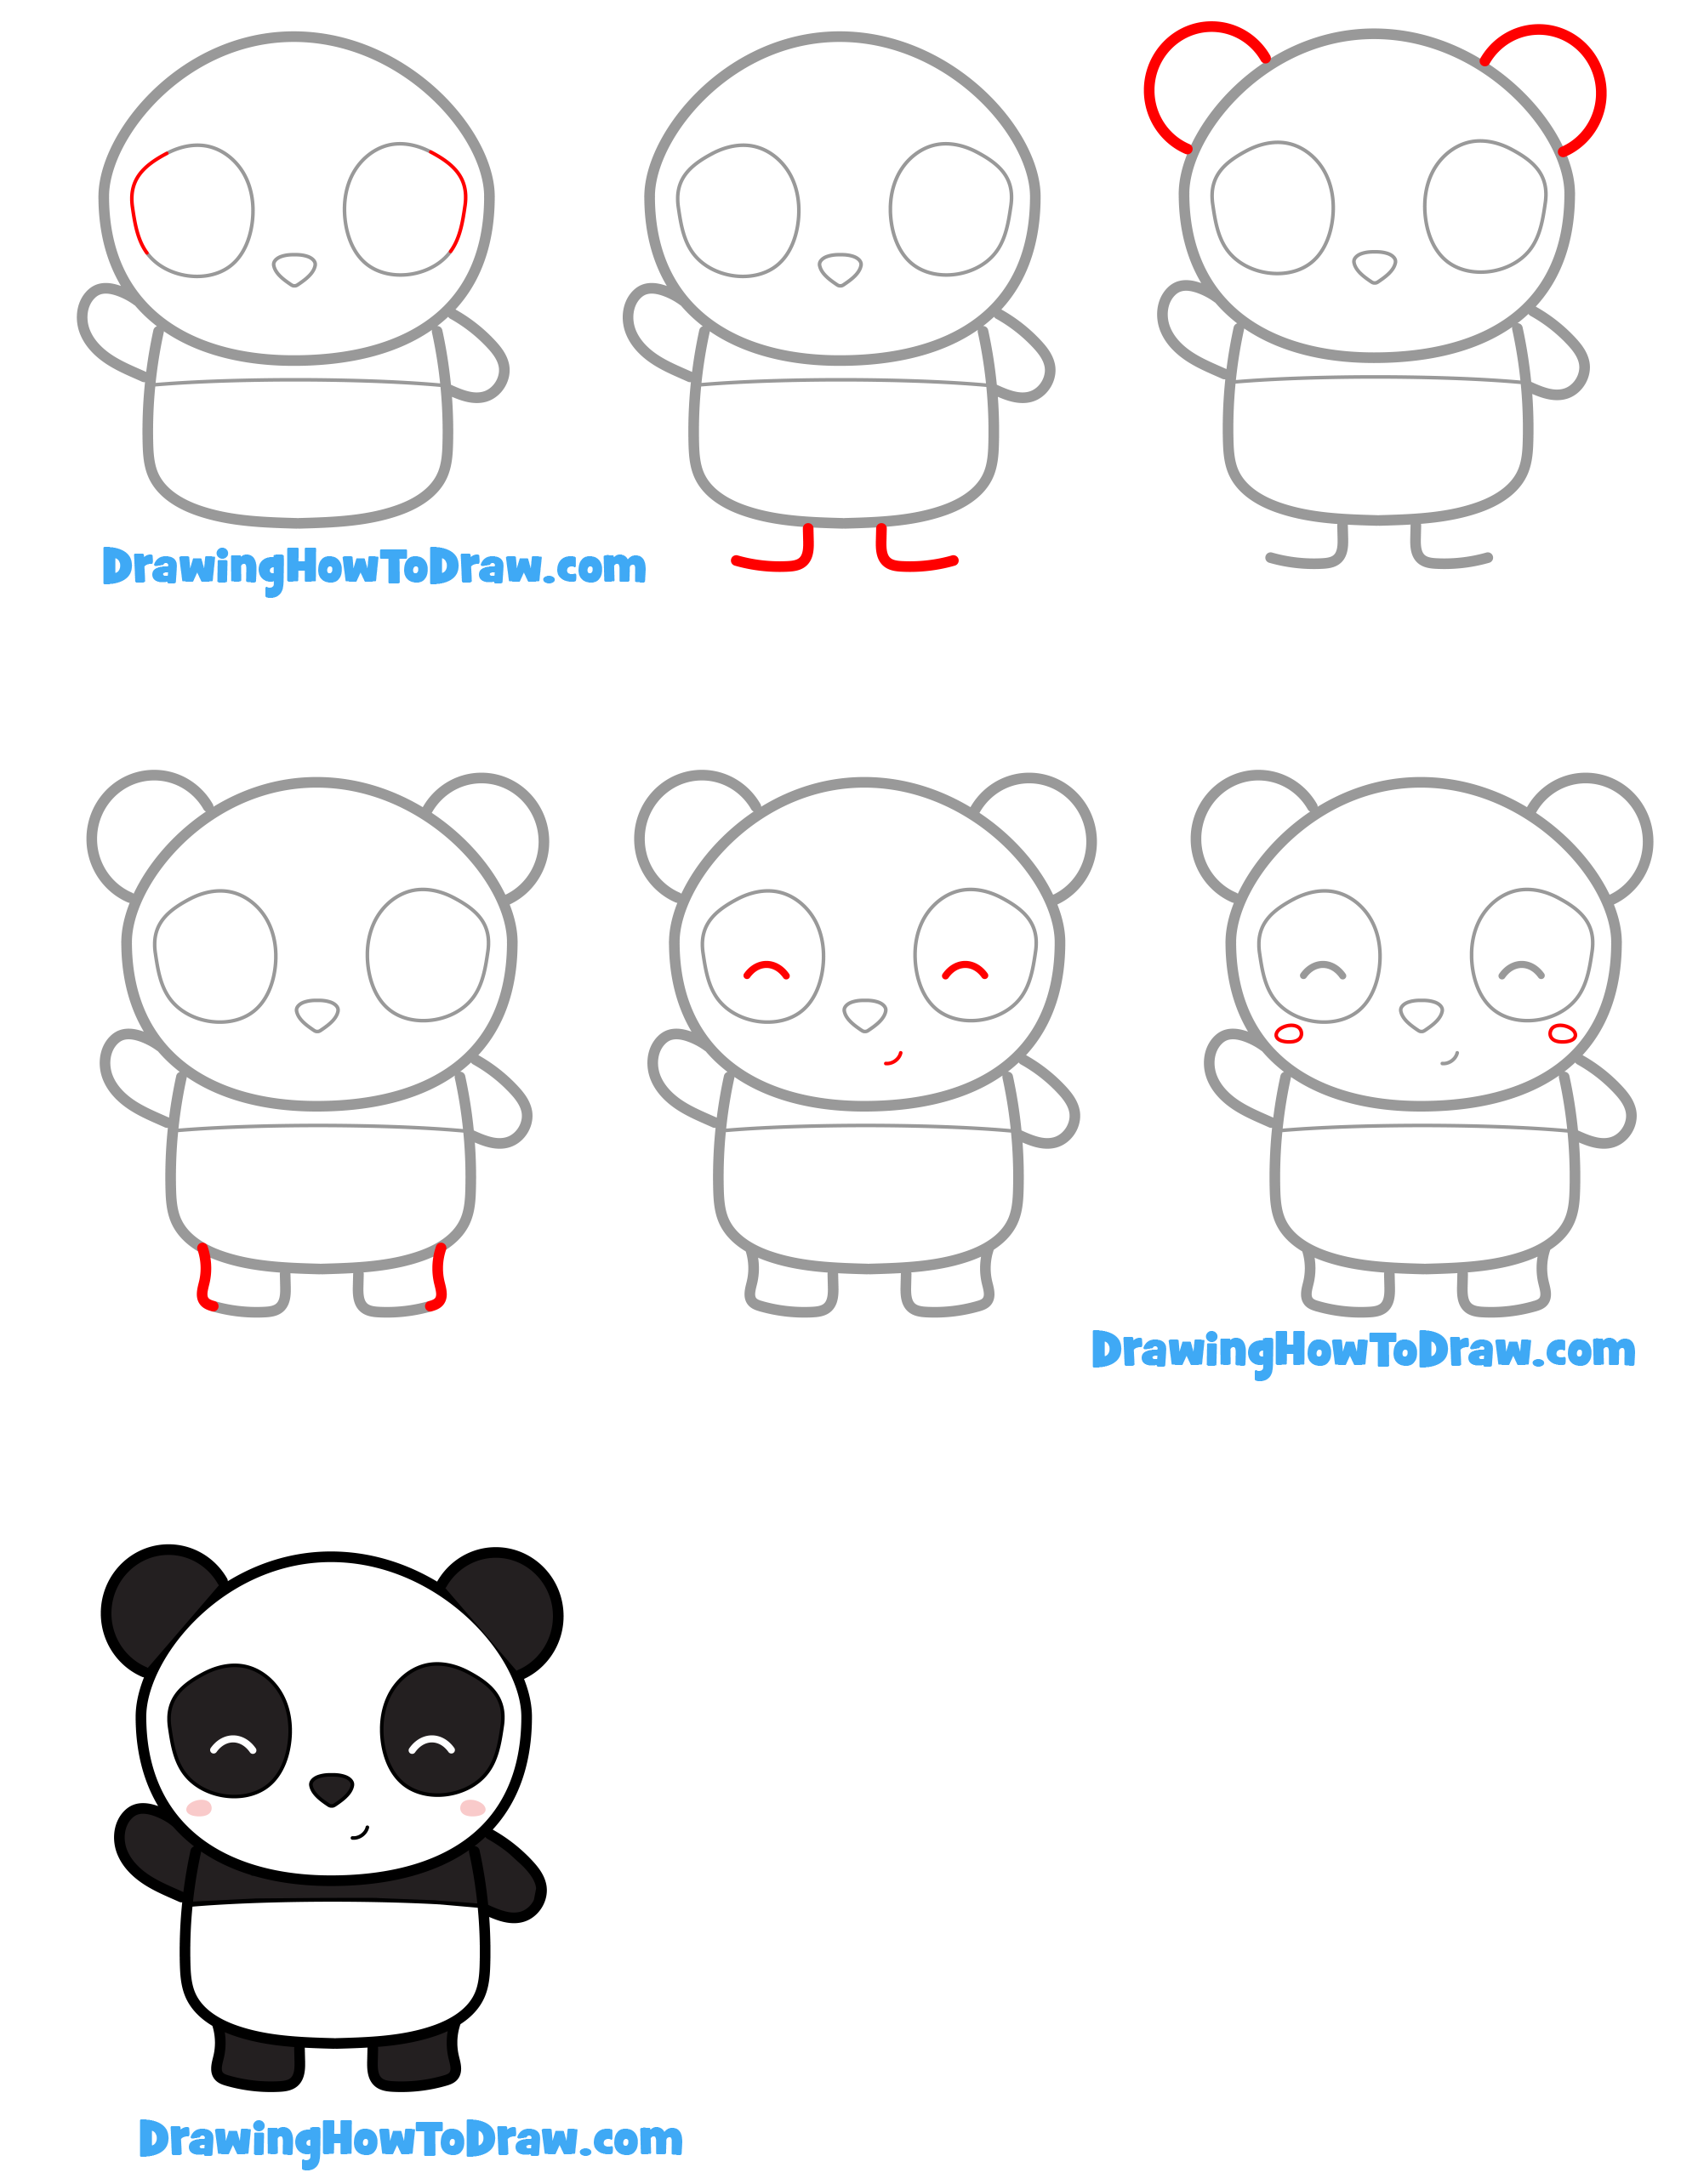 Learn how to draw a cute baby Panda step by step ♥ very simple tutorial  #panda #drawings #kawaii #tutorial #draw…